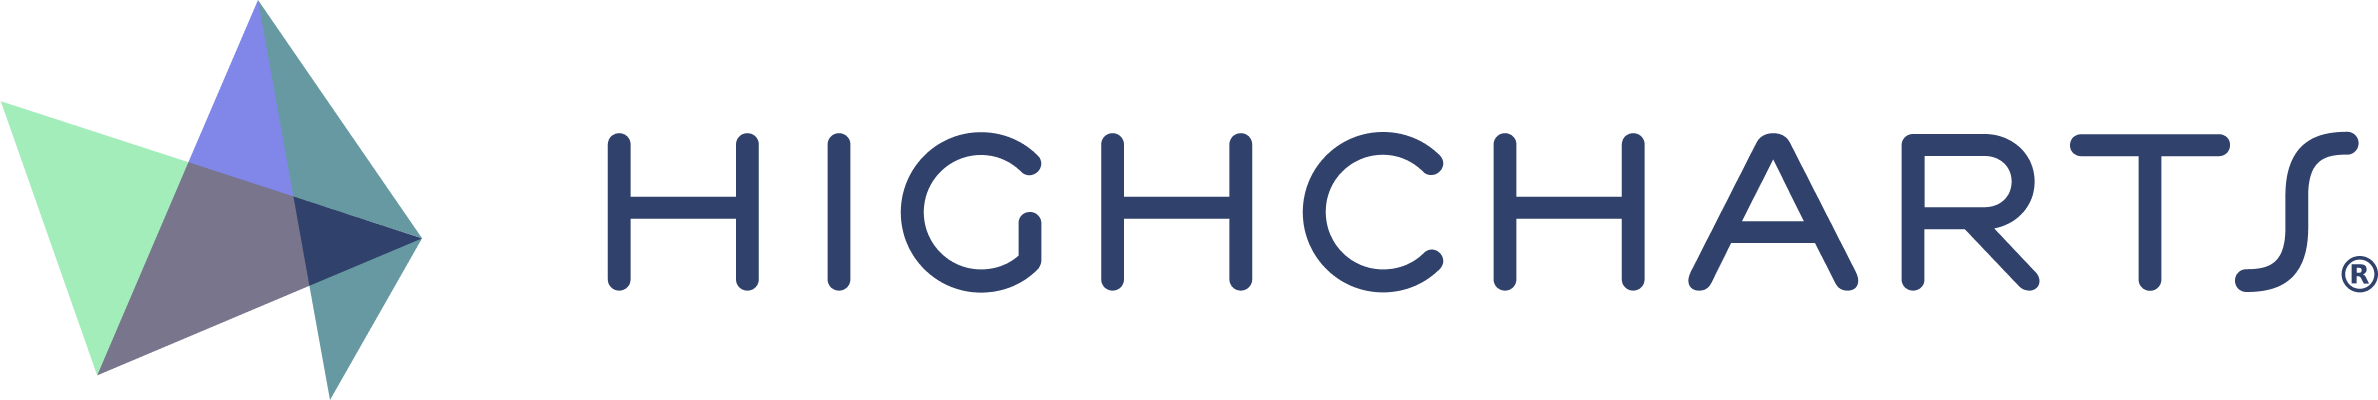 Highcharts Logo